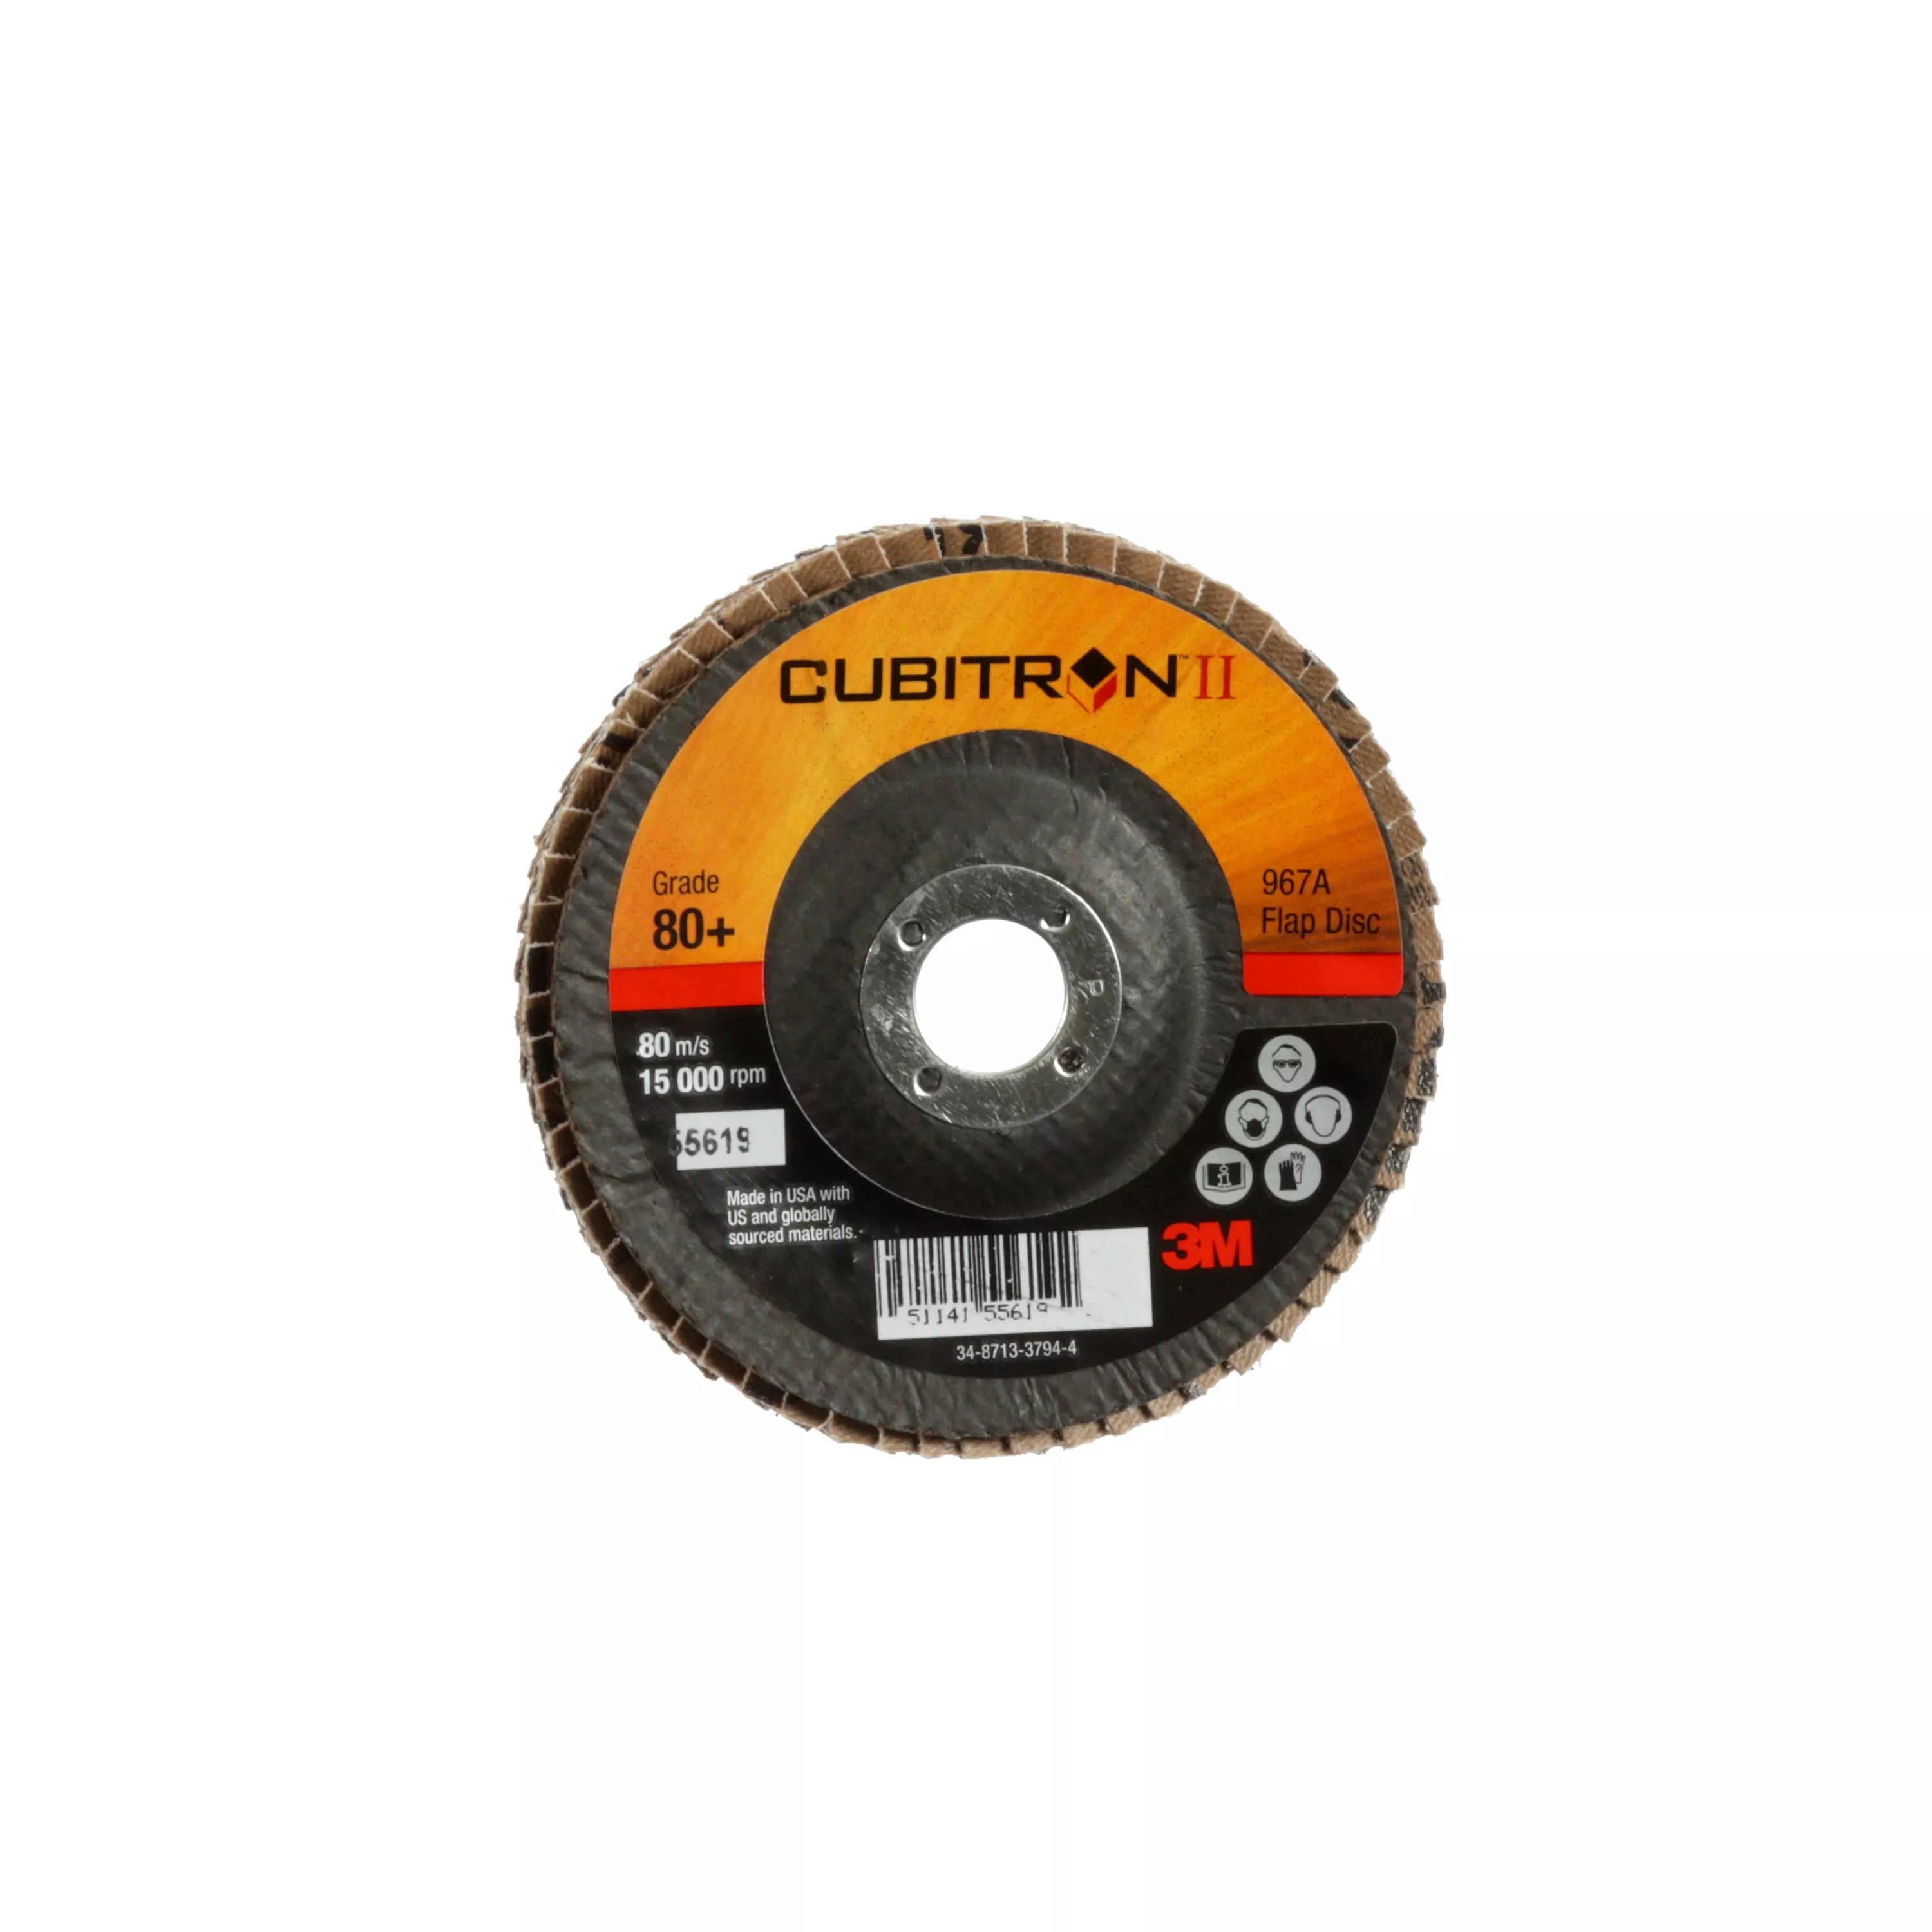 SKU 7100097627 | 3M™ Cubitron™ II Flap Disc 967A